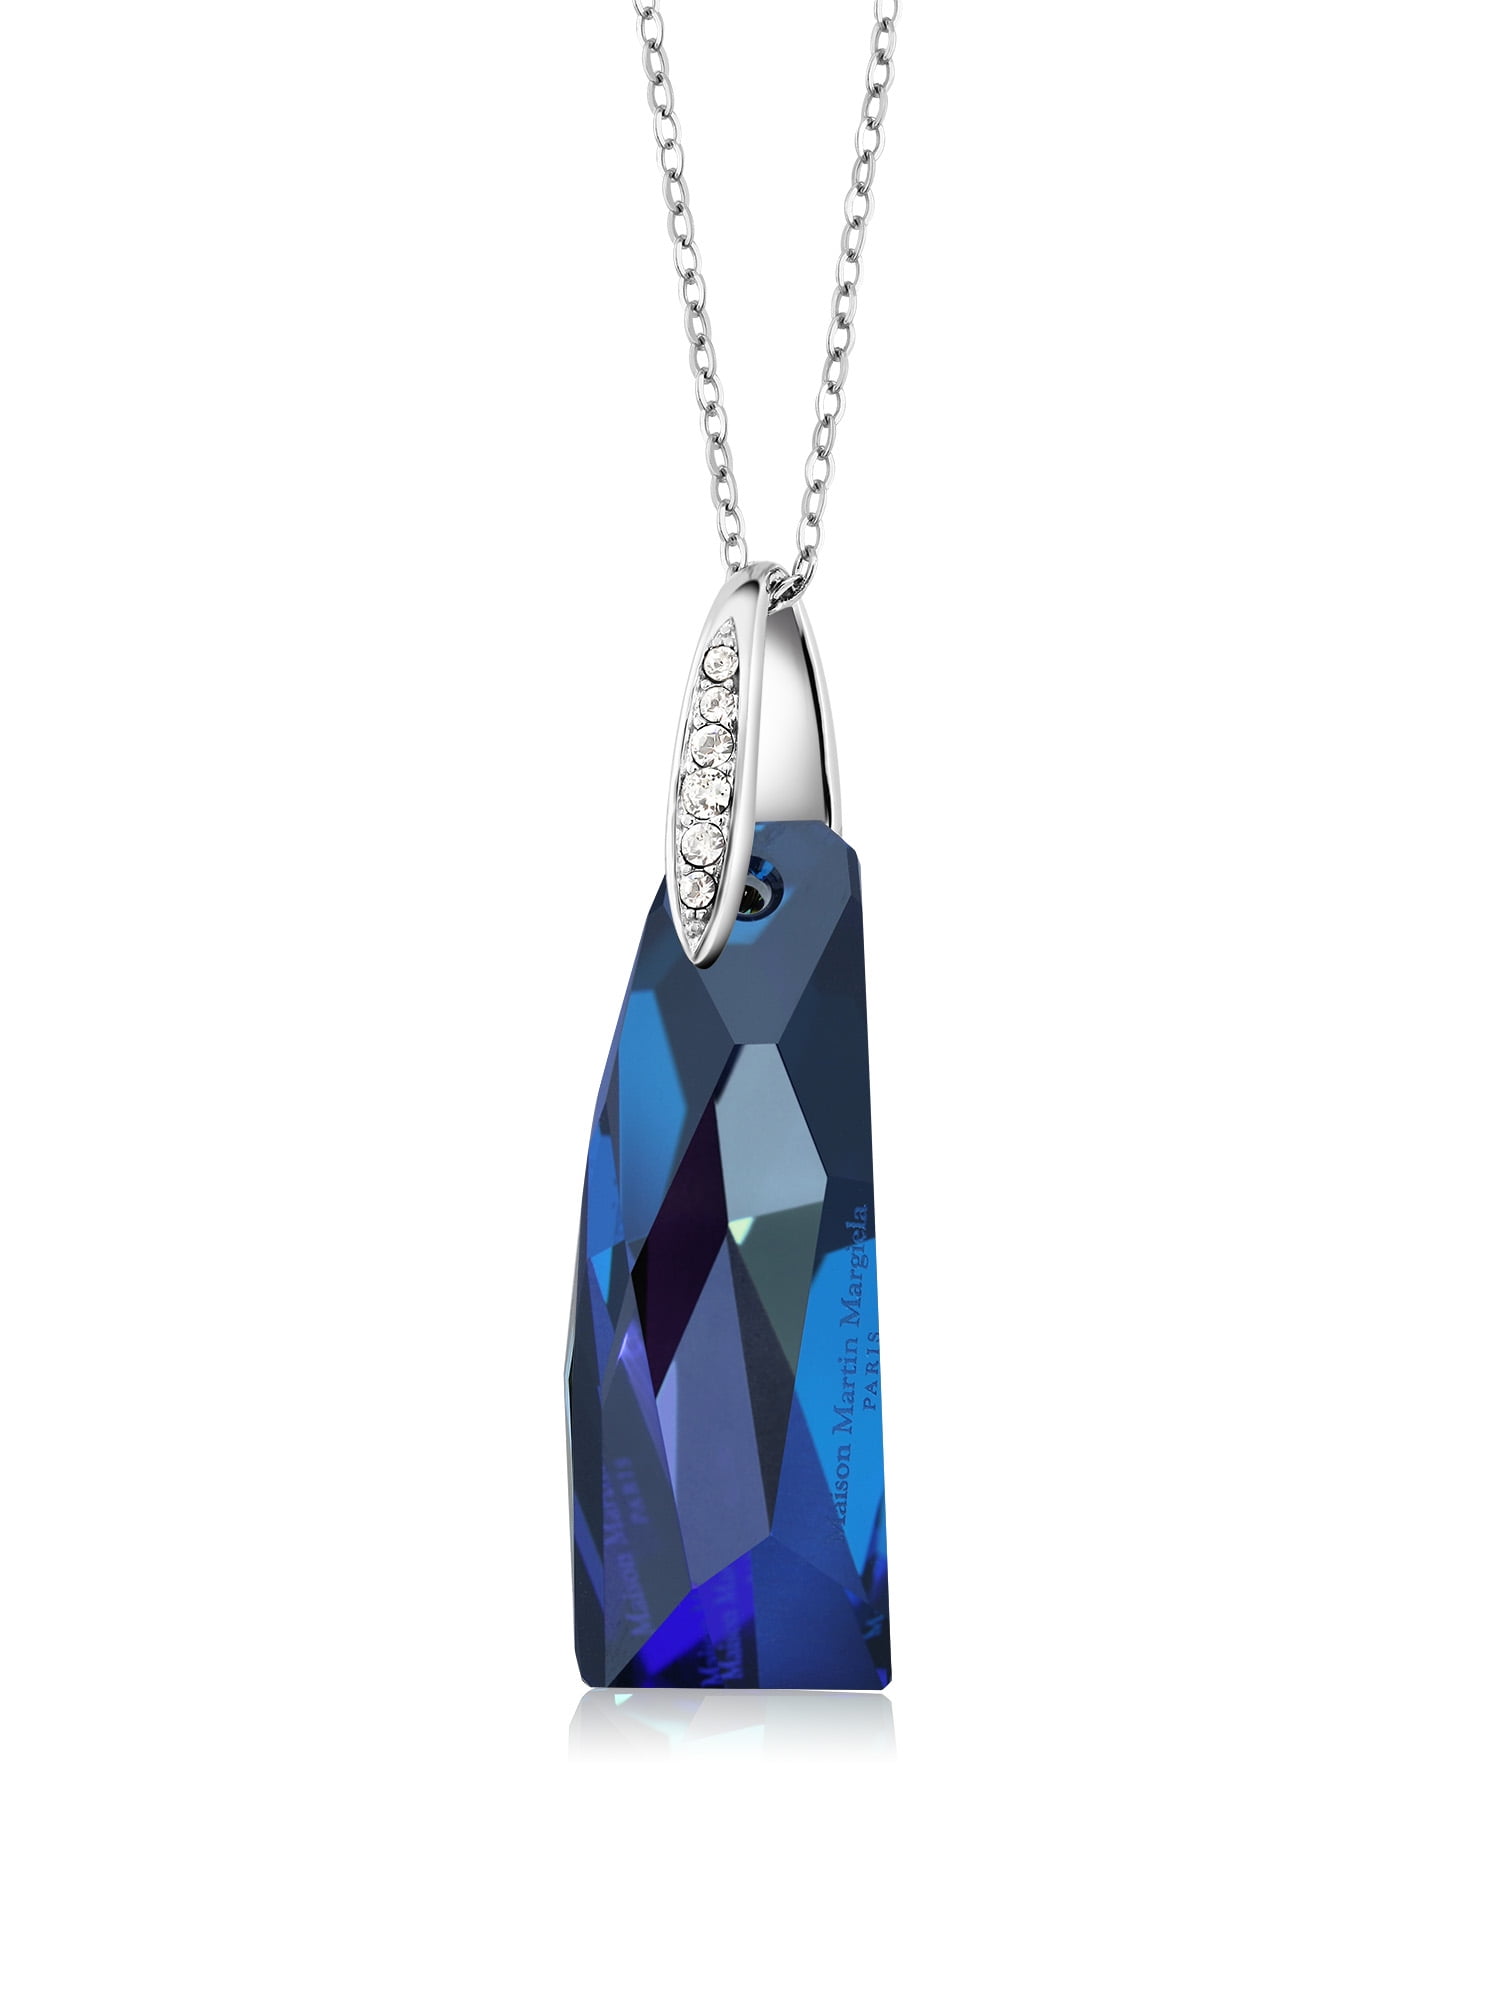 Bermuda Blue Crystal Pendant